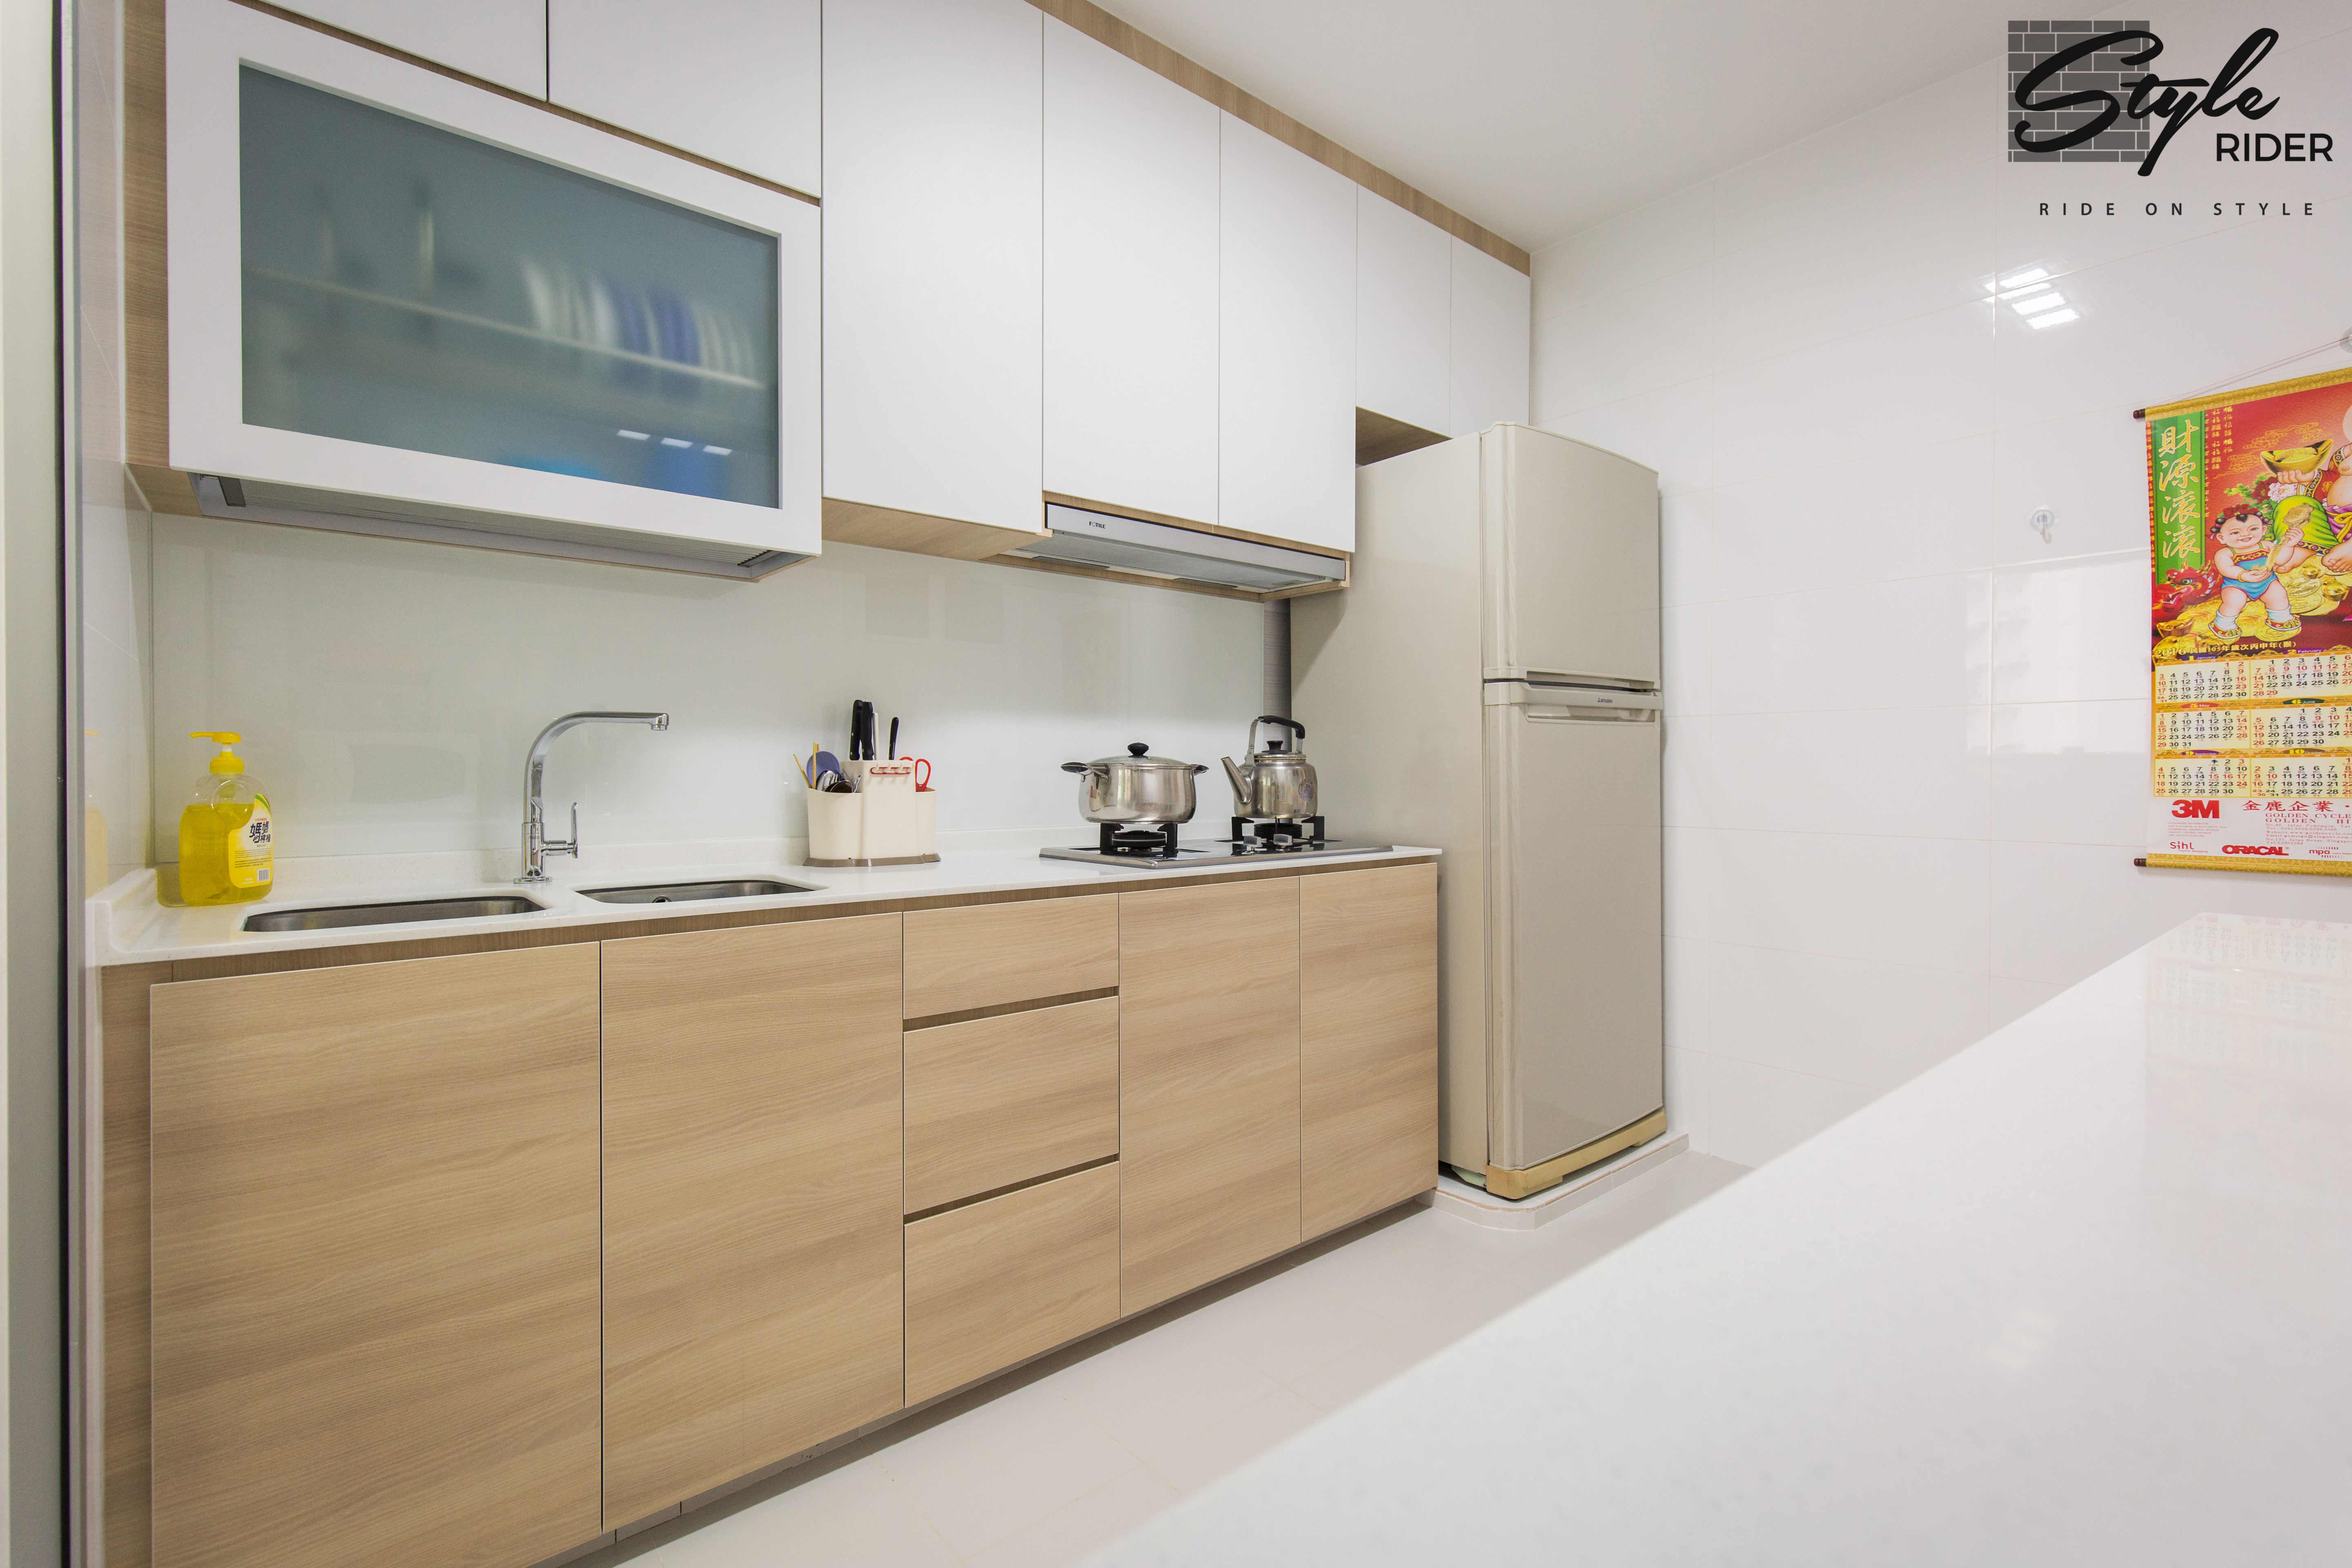 Eclectic, Modern, Scandinavian Design - Kitchen - HDB 4 Room - Design by Stylerider Pte Ltd